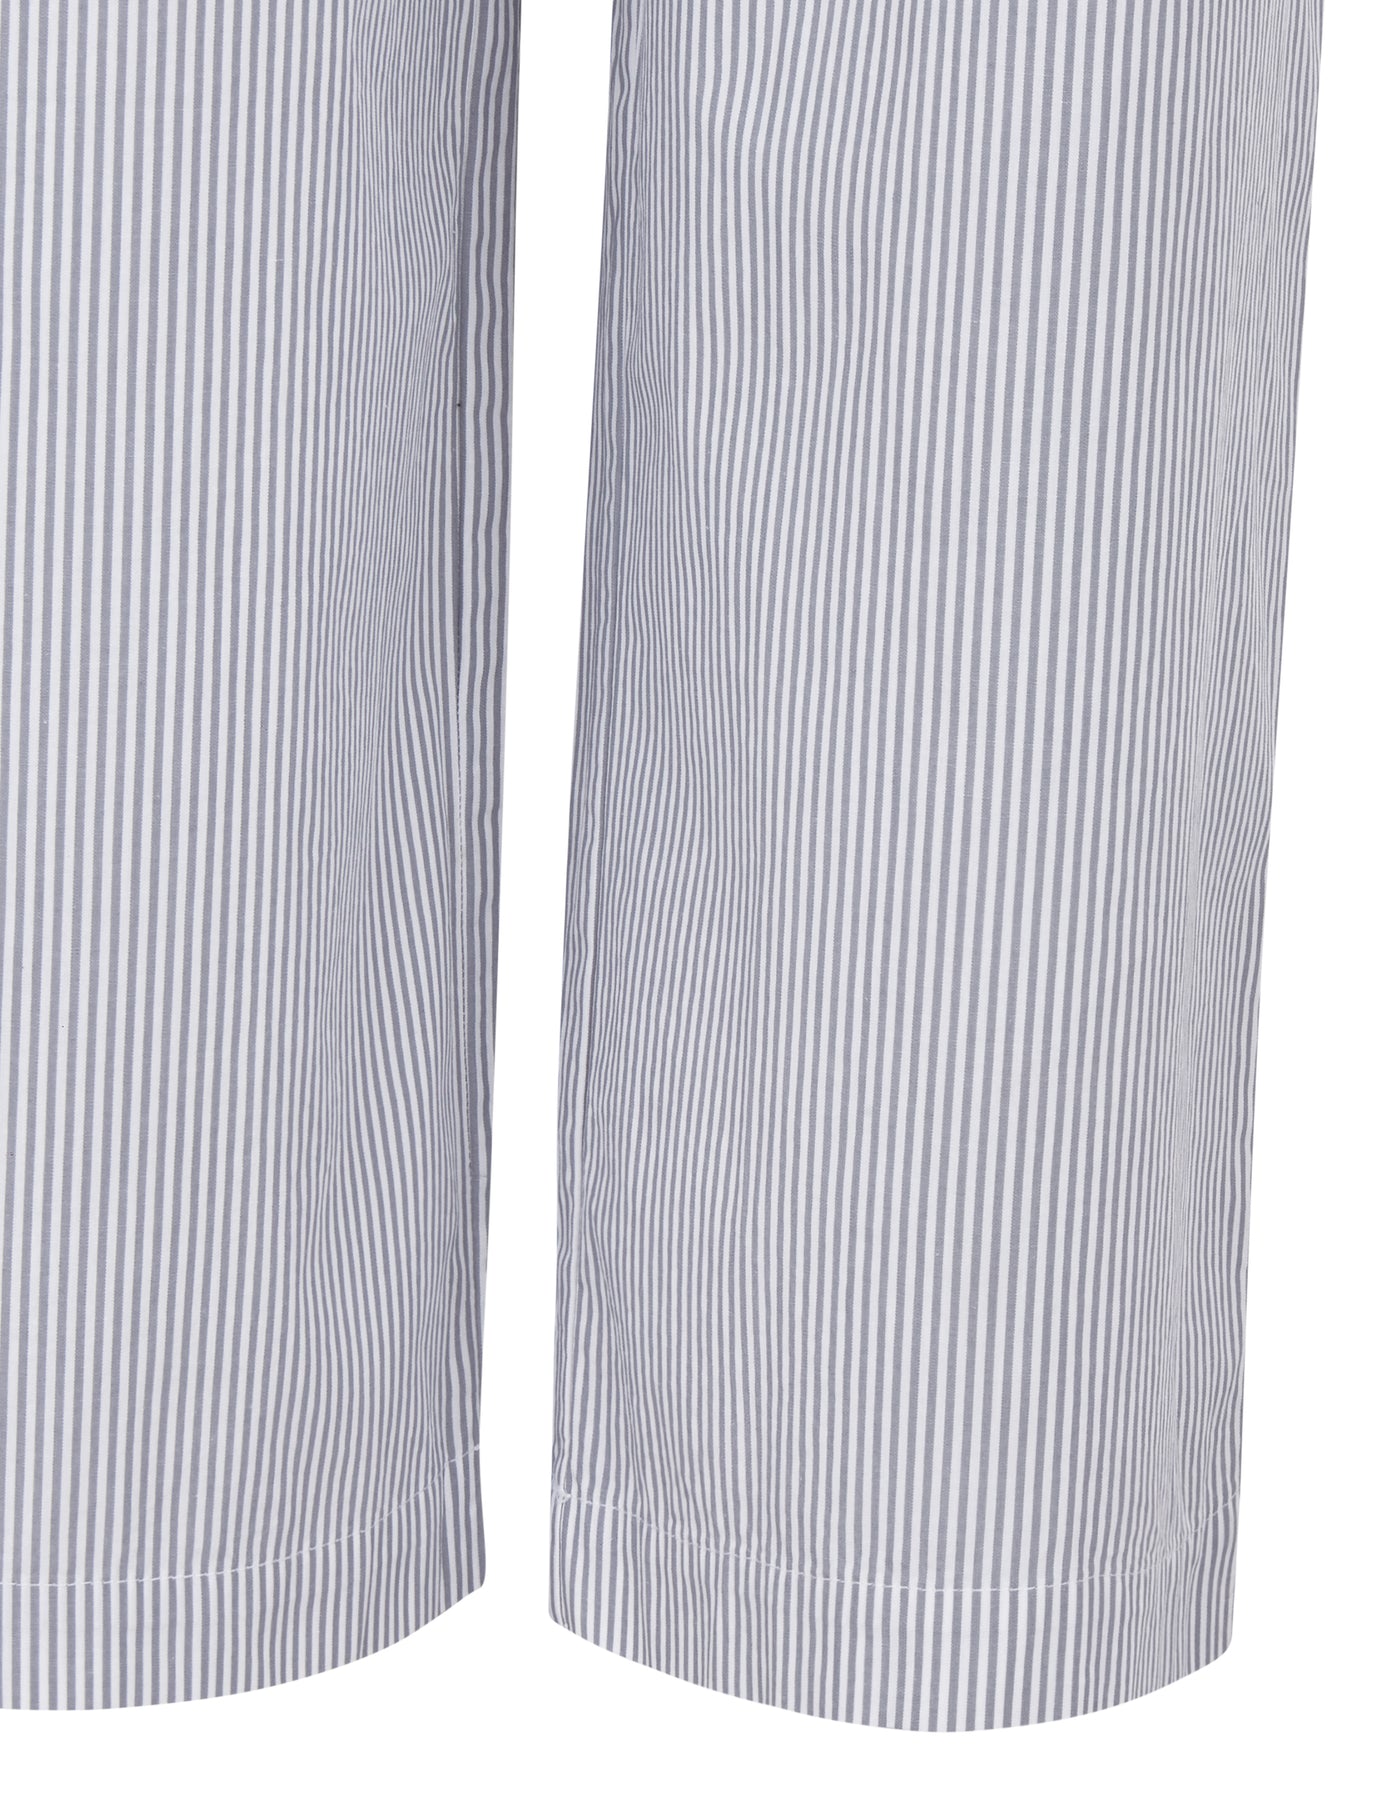 esmé studios ESRuby Pants GOTS Homewear 228 Tradewinds Stripes